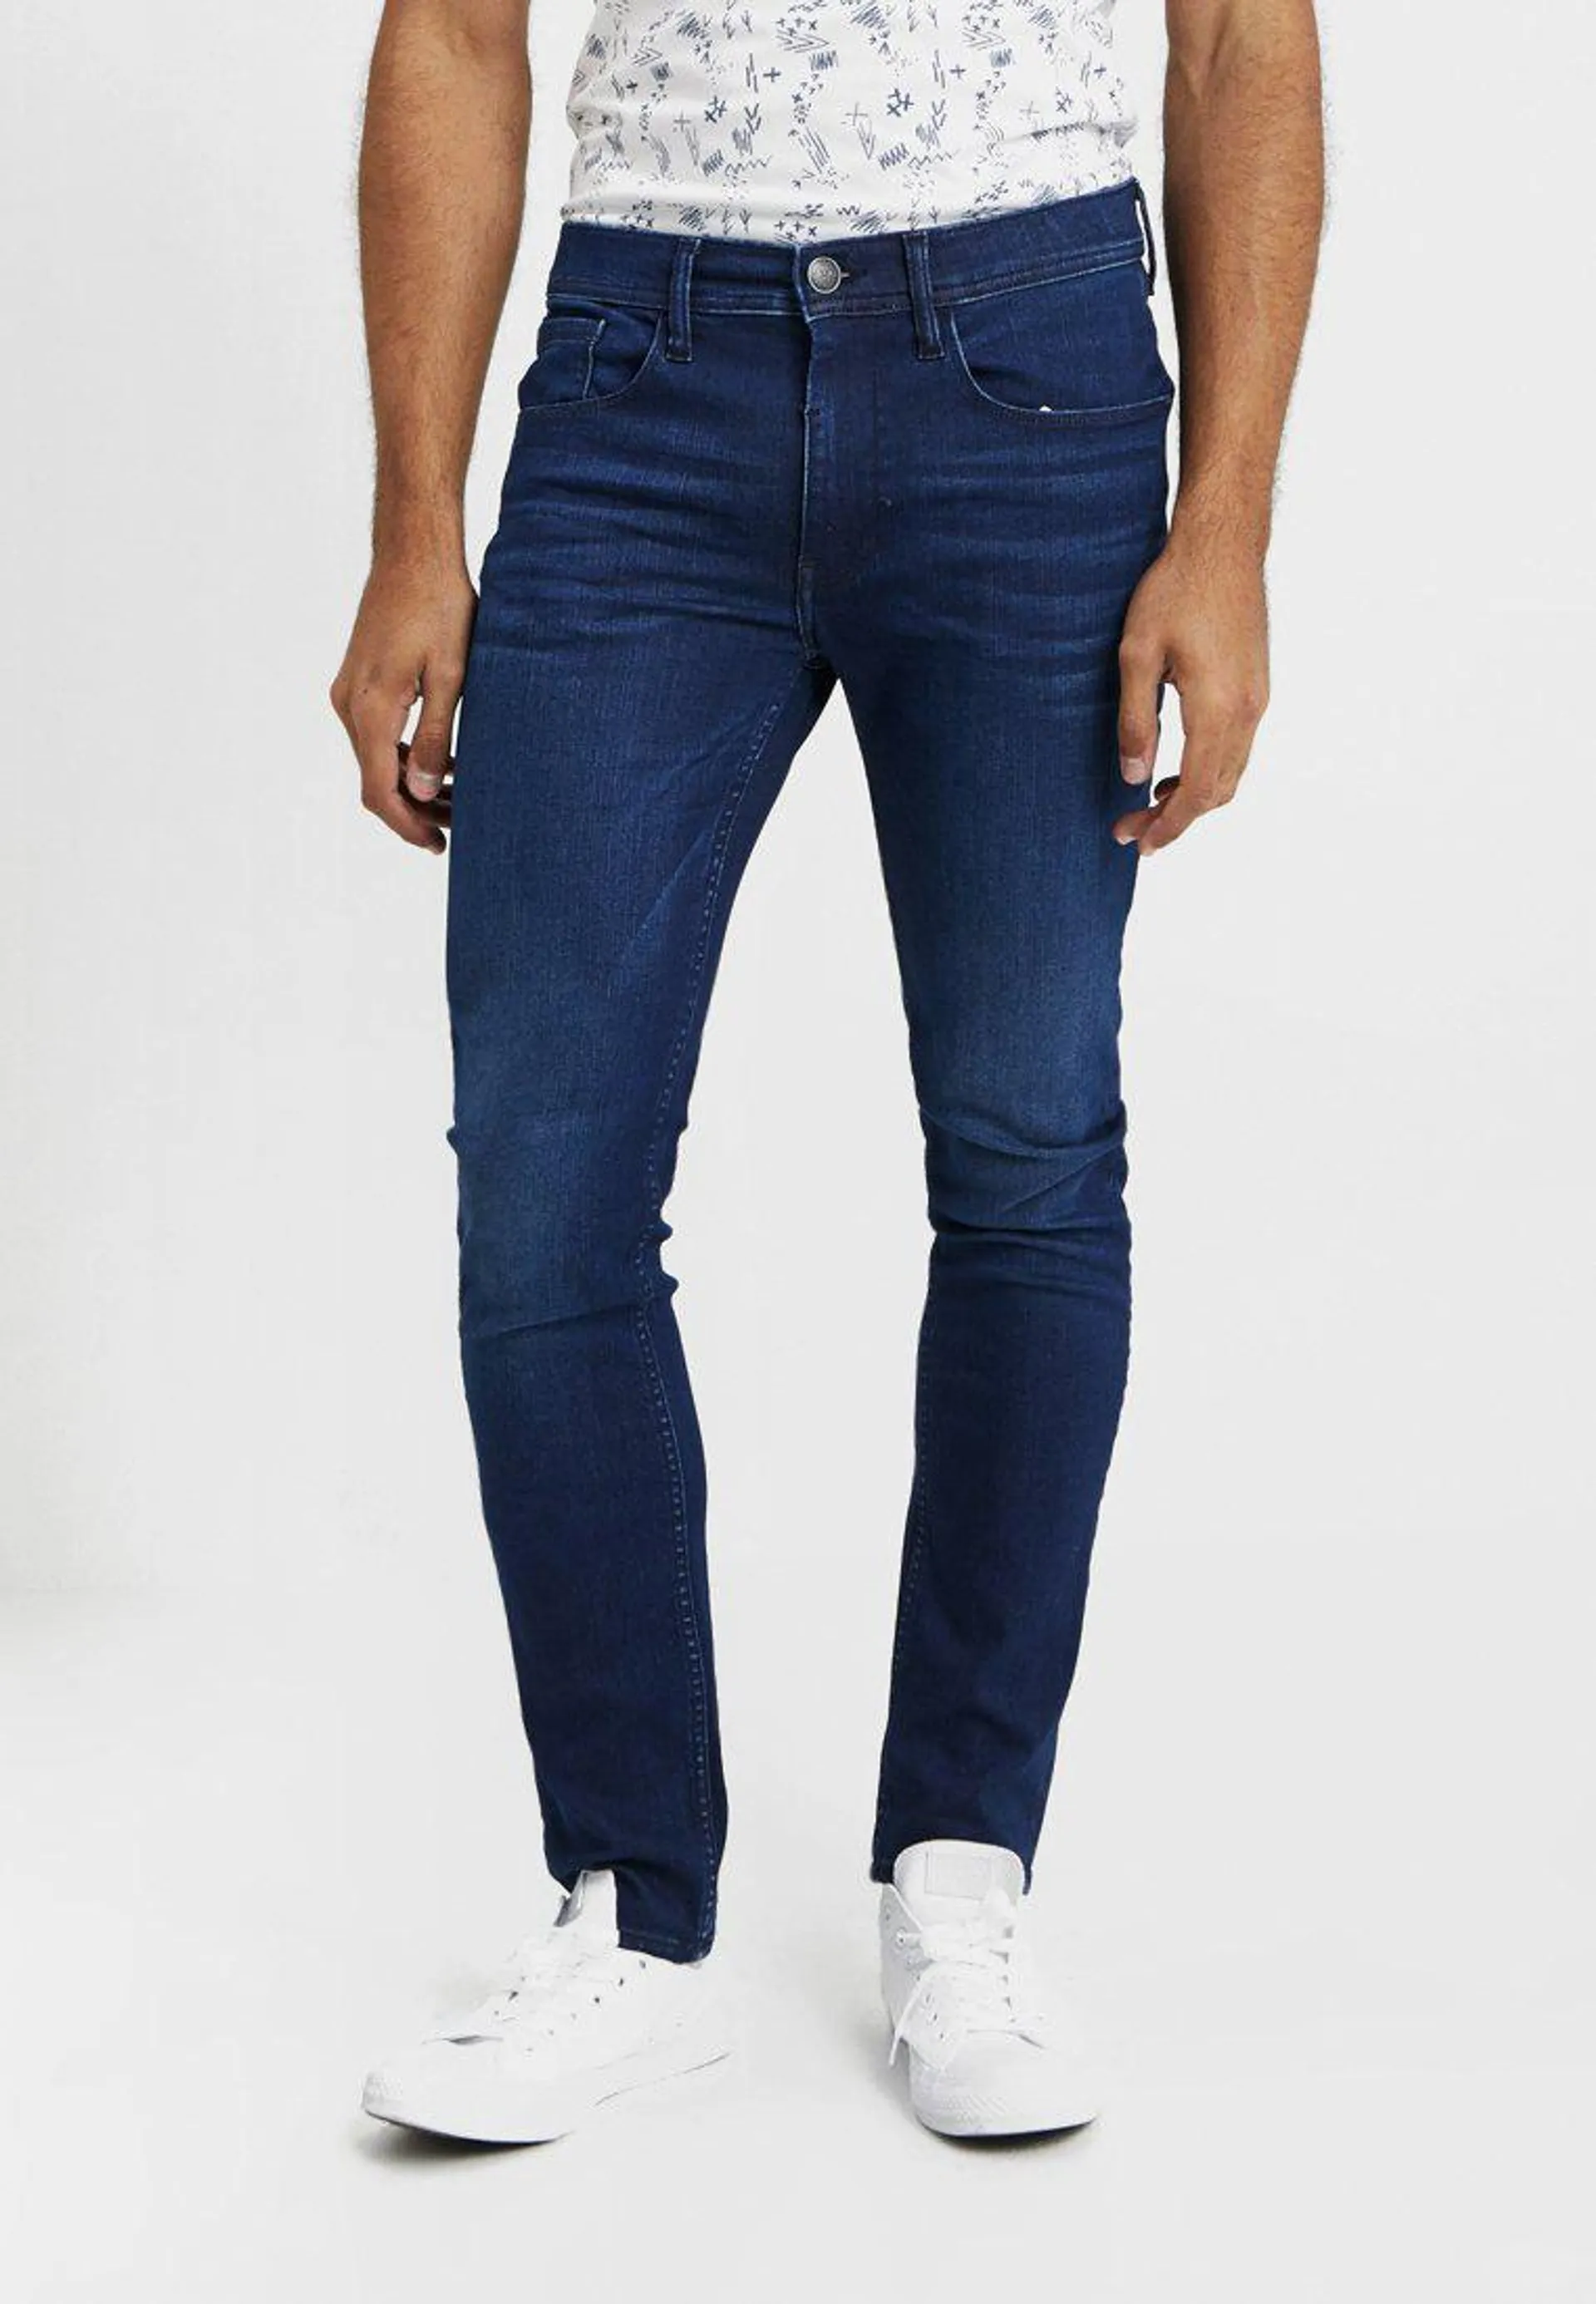 JET - Slim fit jeans